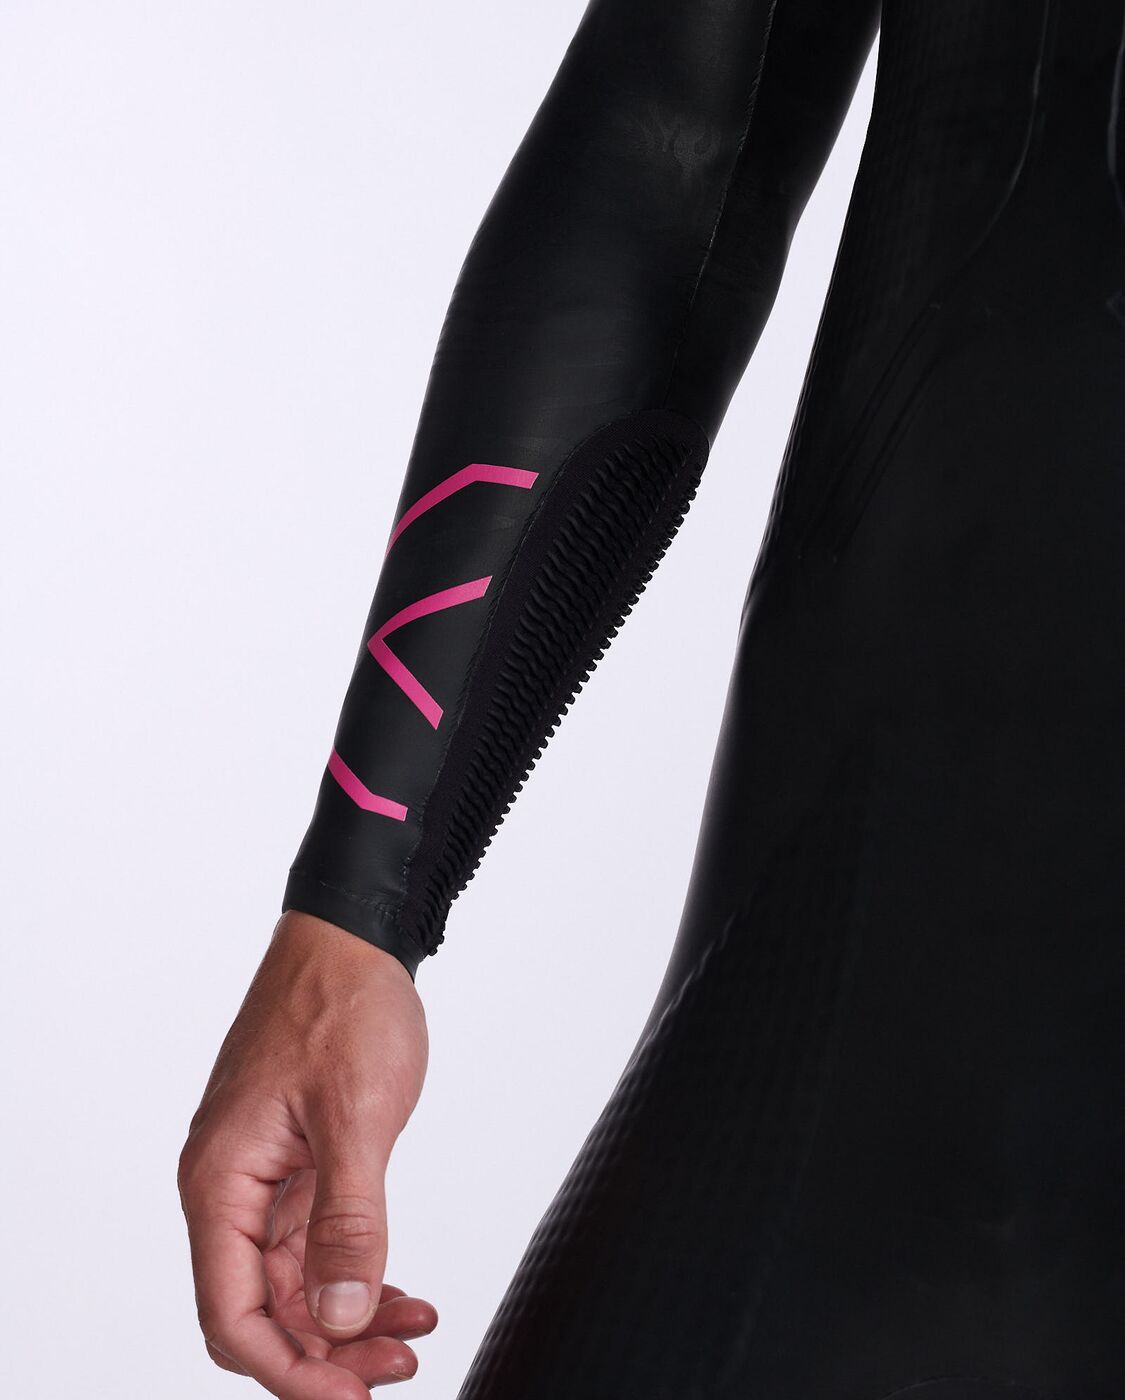 2XU South Africa - Men's Propel: Pro Wetsuit - Black/Punk Pink